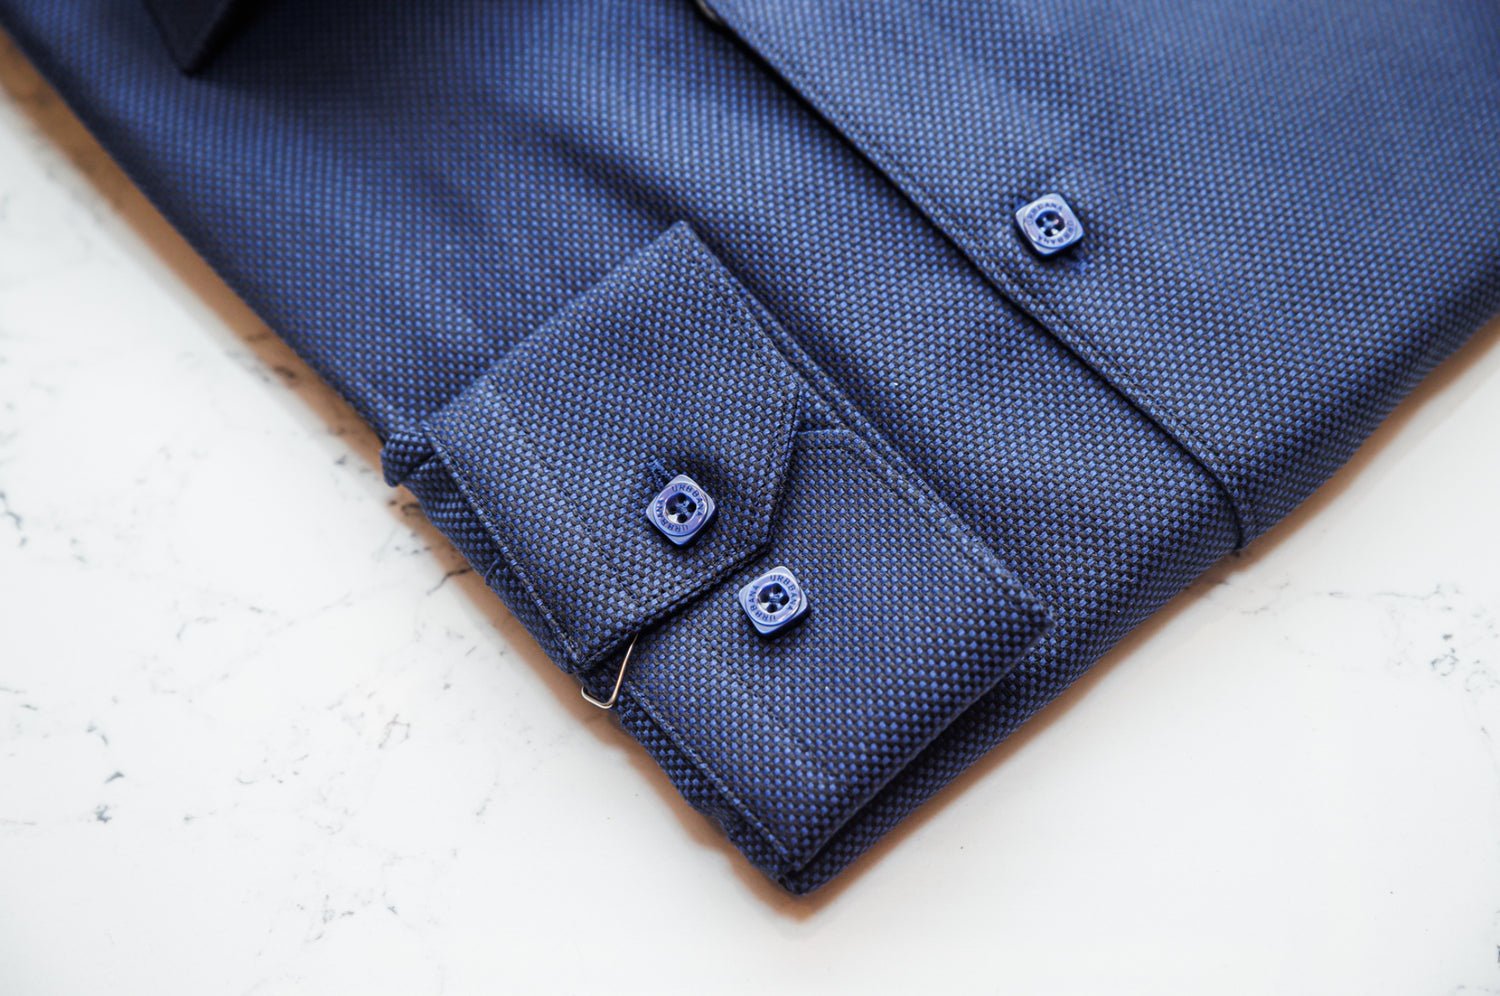 The Blue Knit Shirt - Shirt by Urbbana